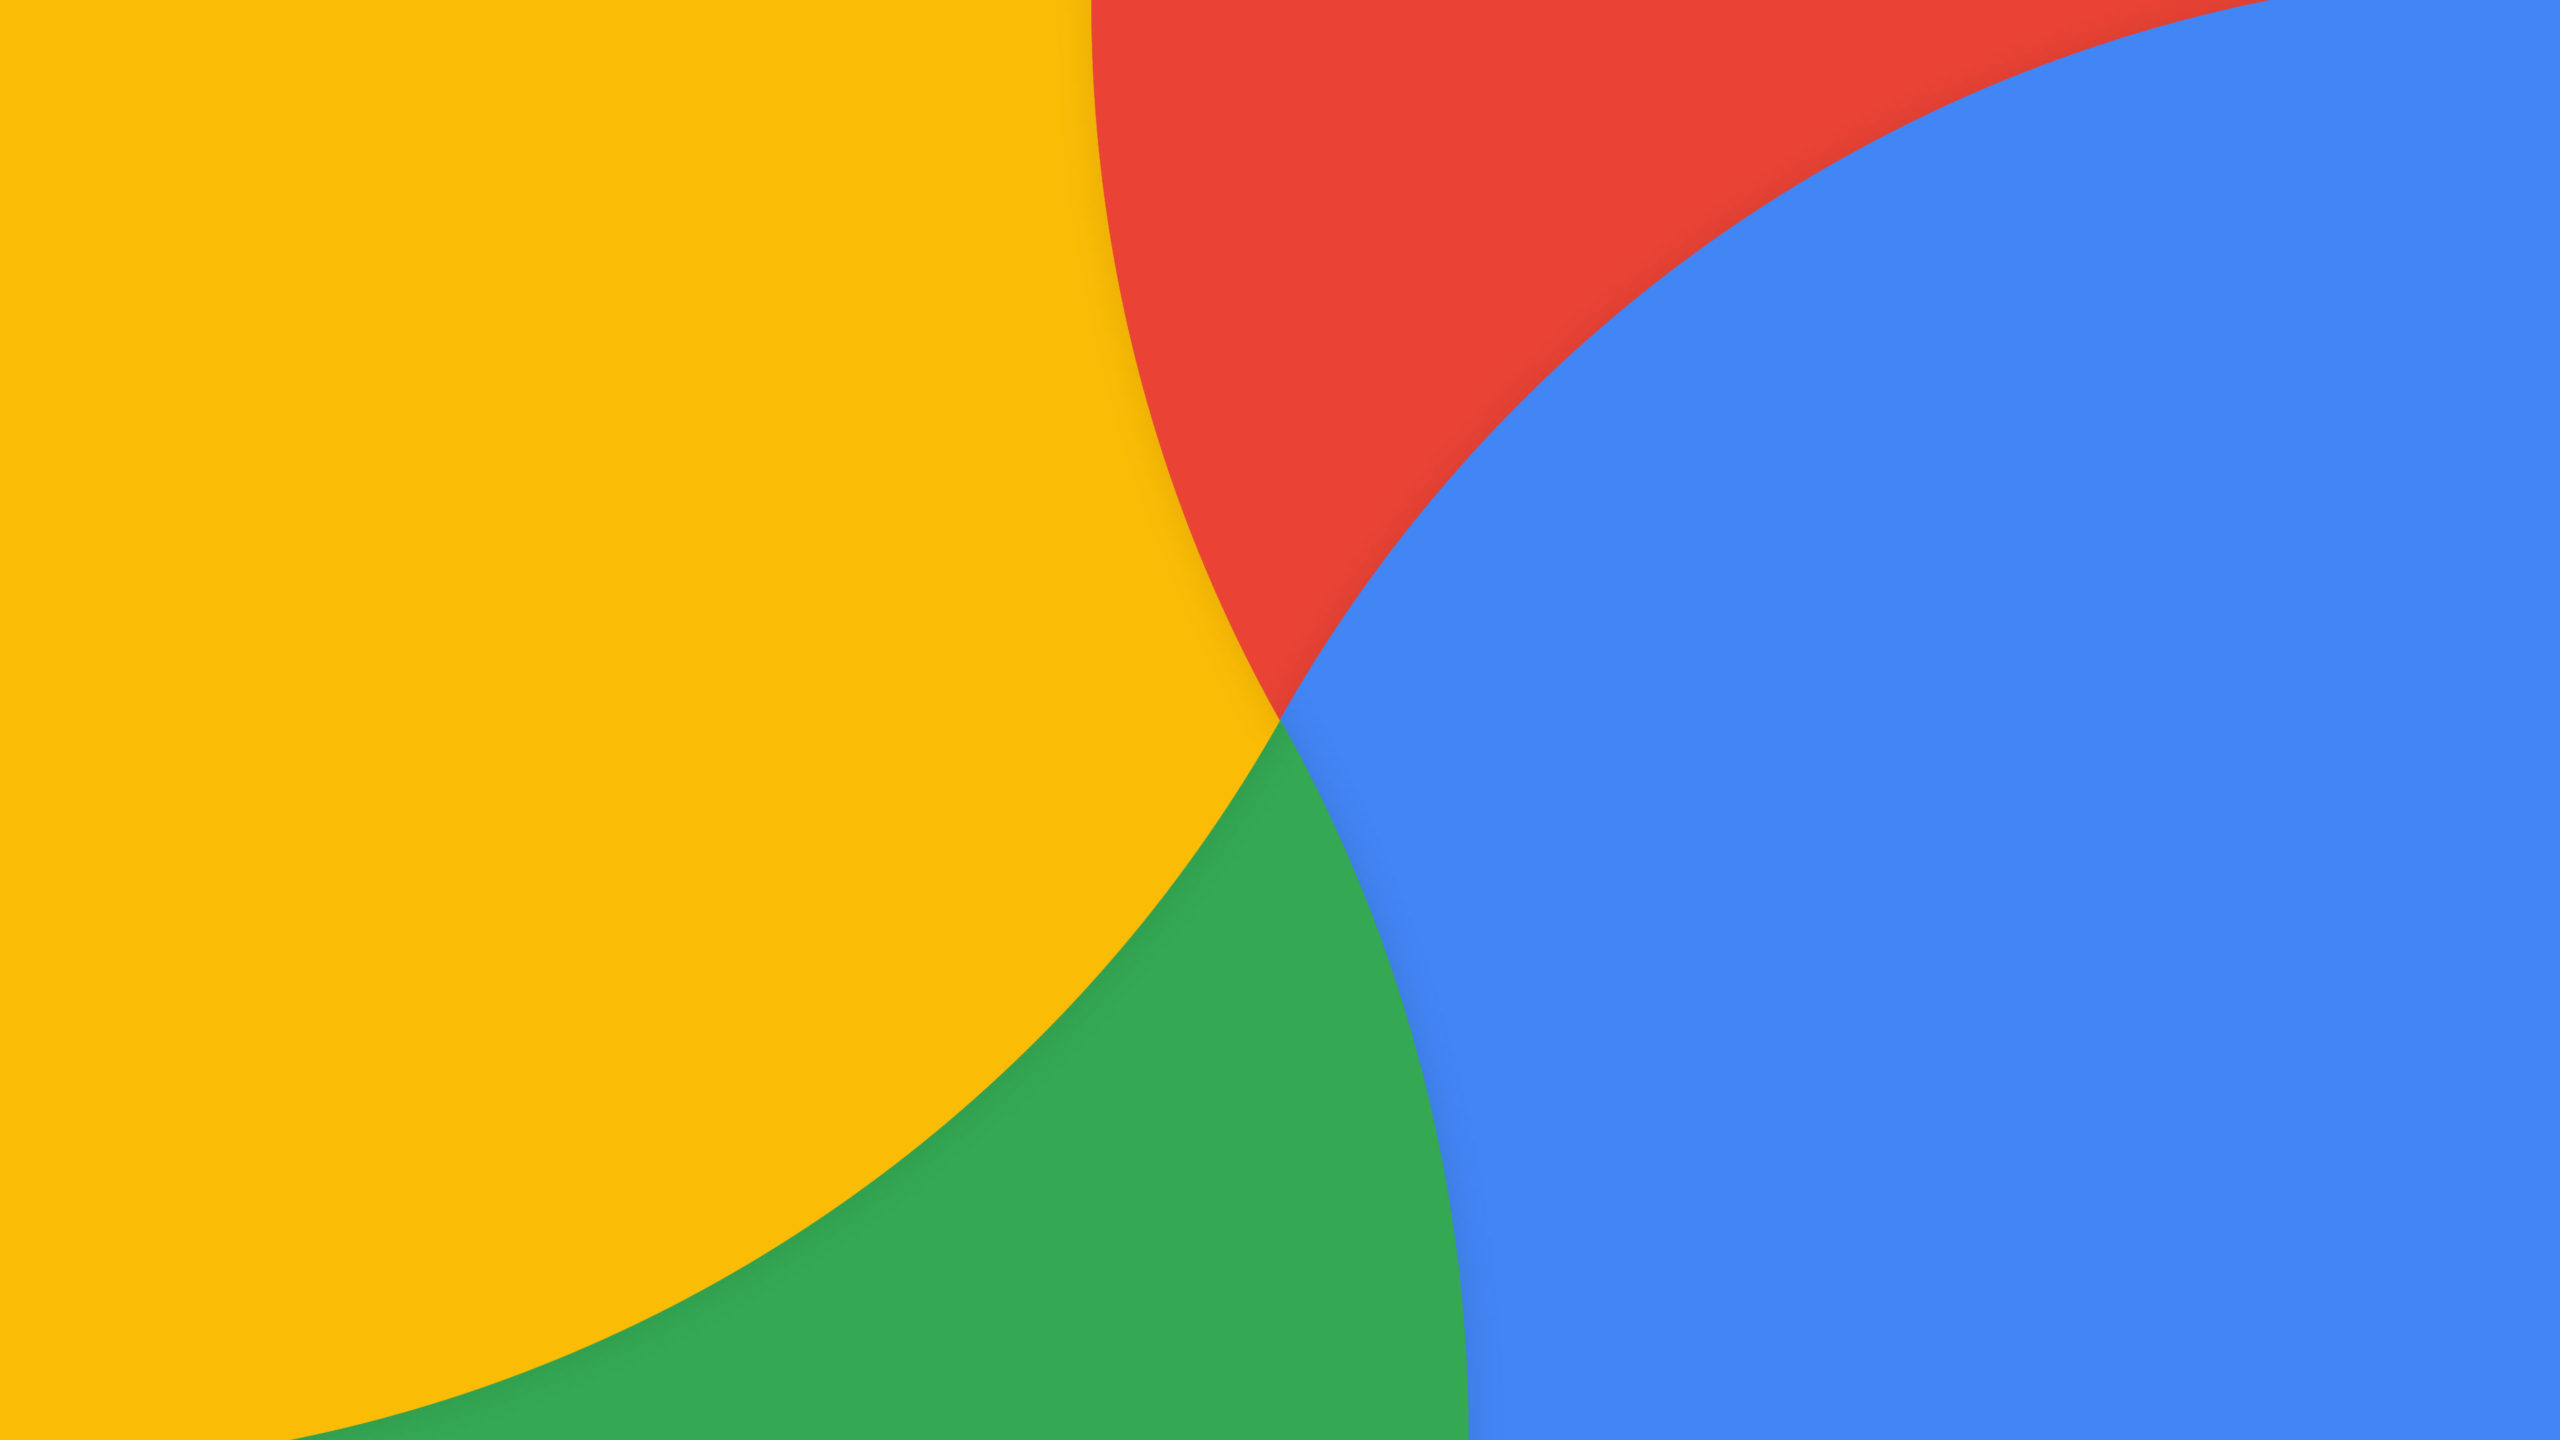 Larry Page a Google legenda